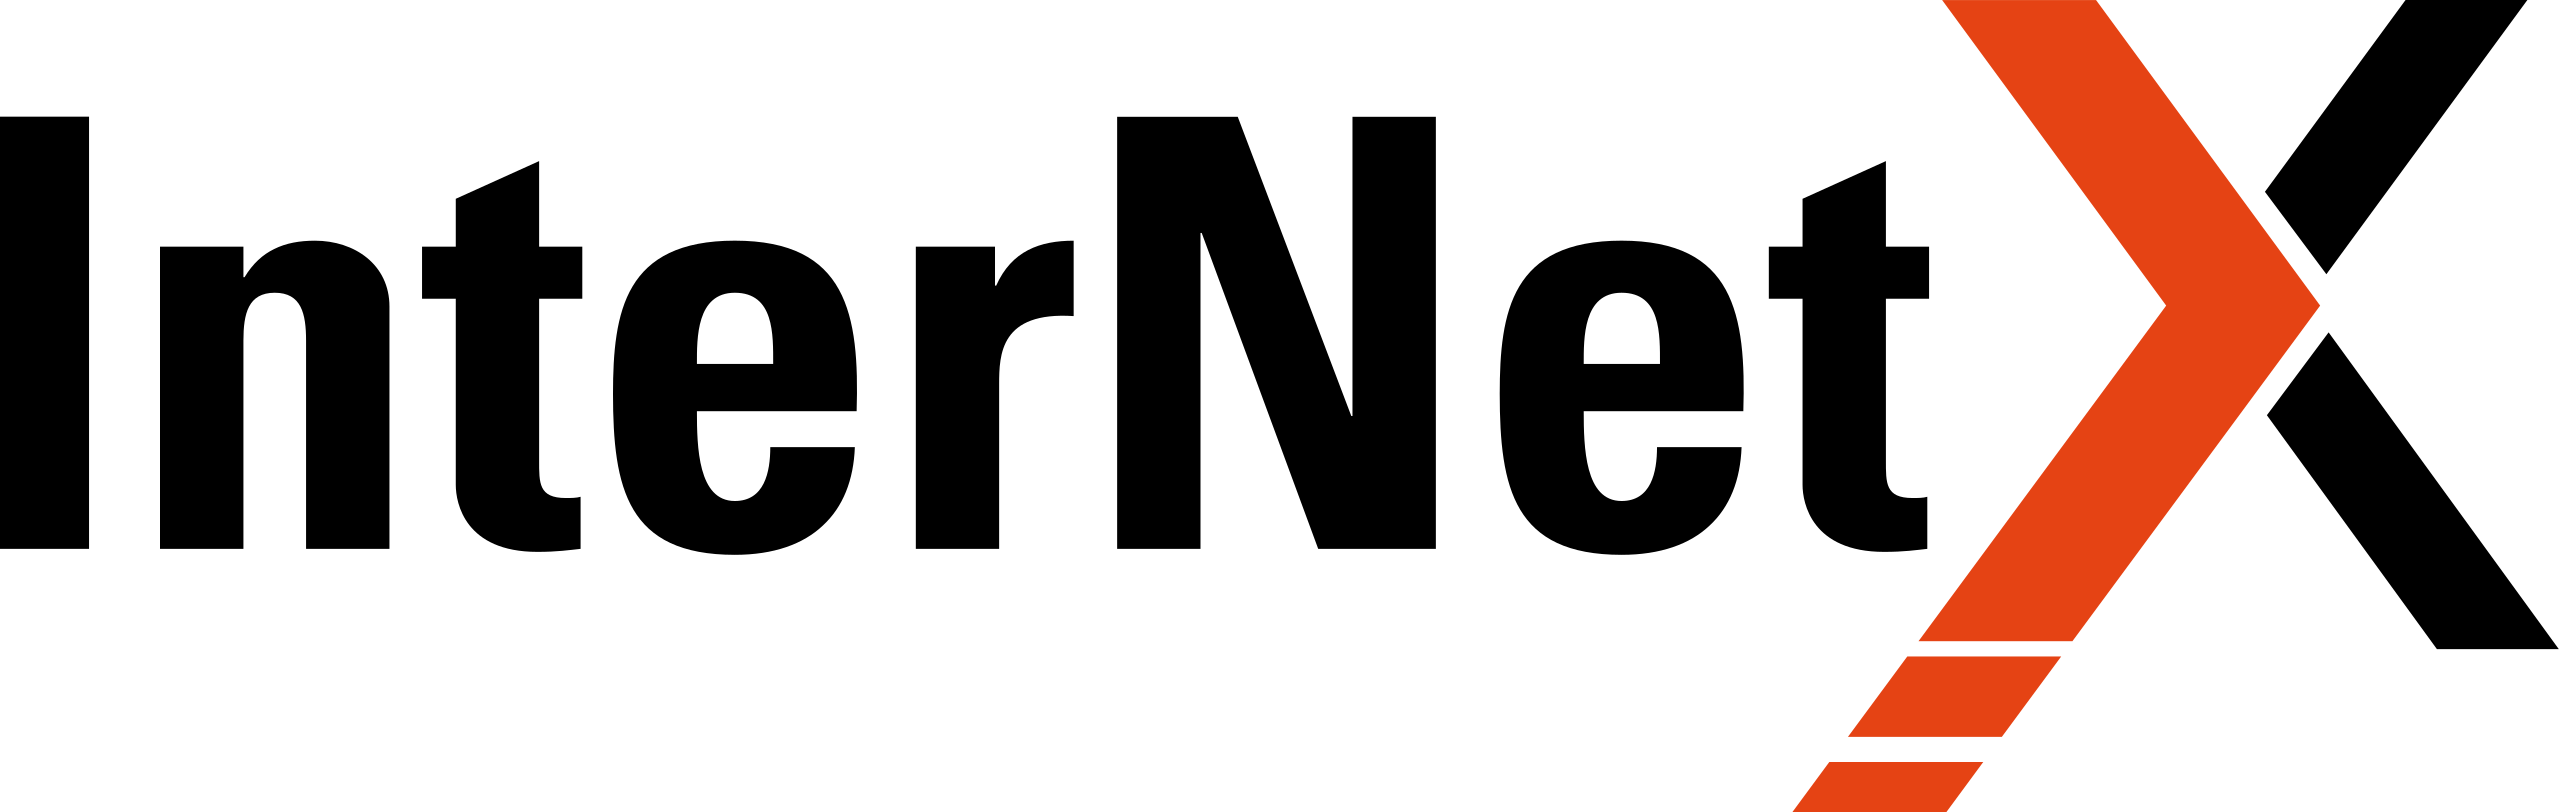 internetx-logo